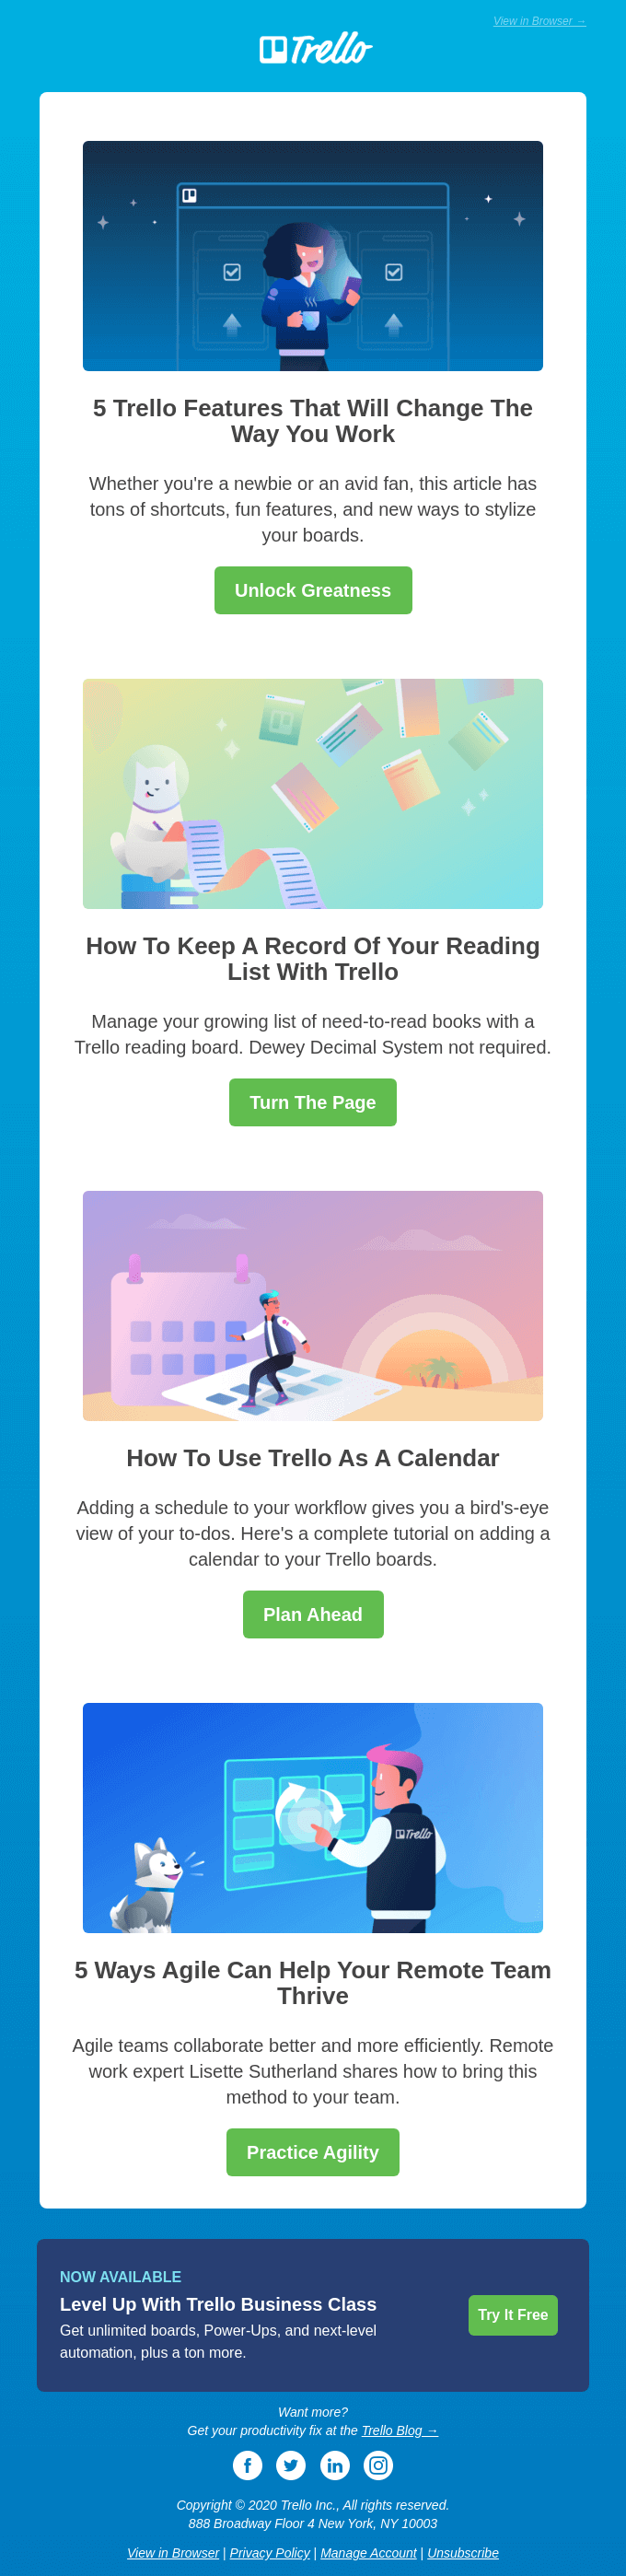 How to use Trello as a calendar 🗓 from Trello Desktop Email View